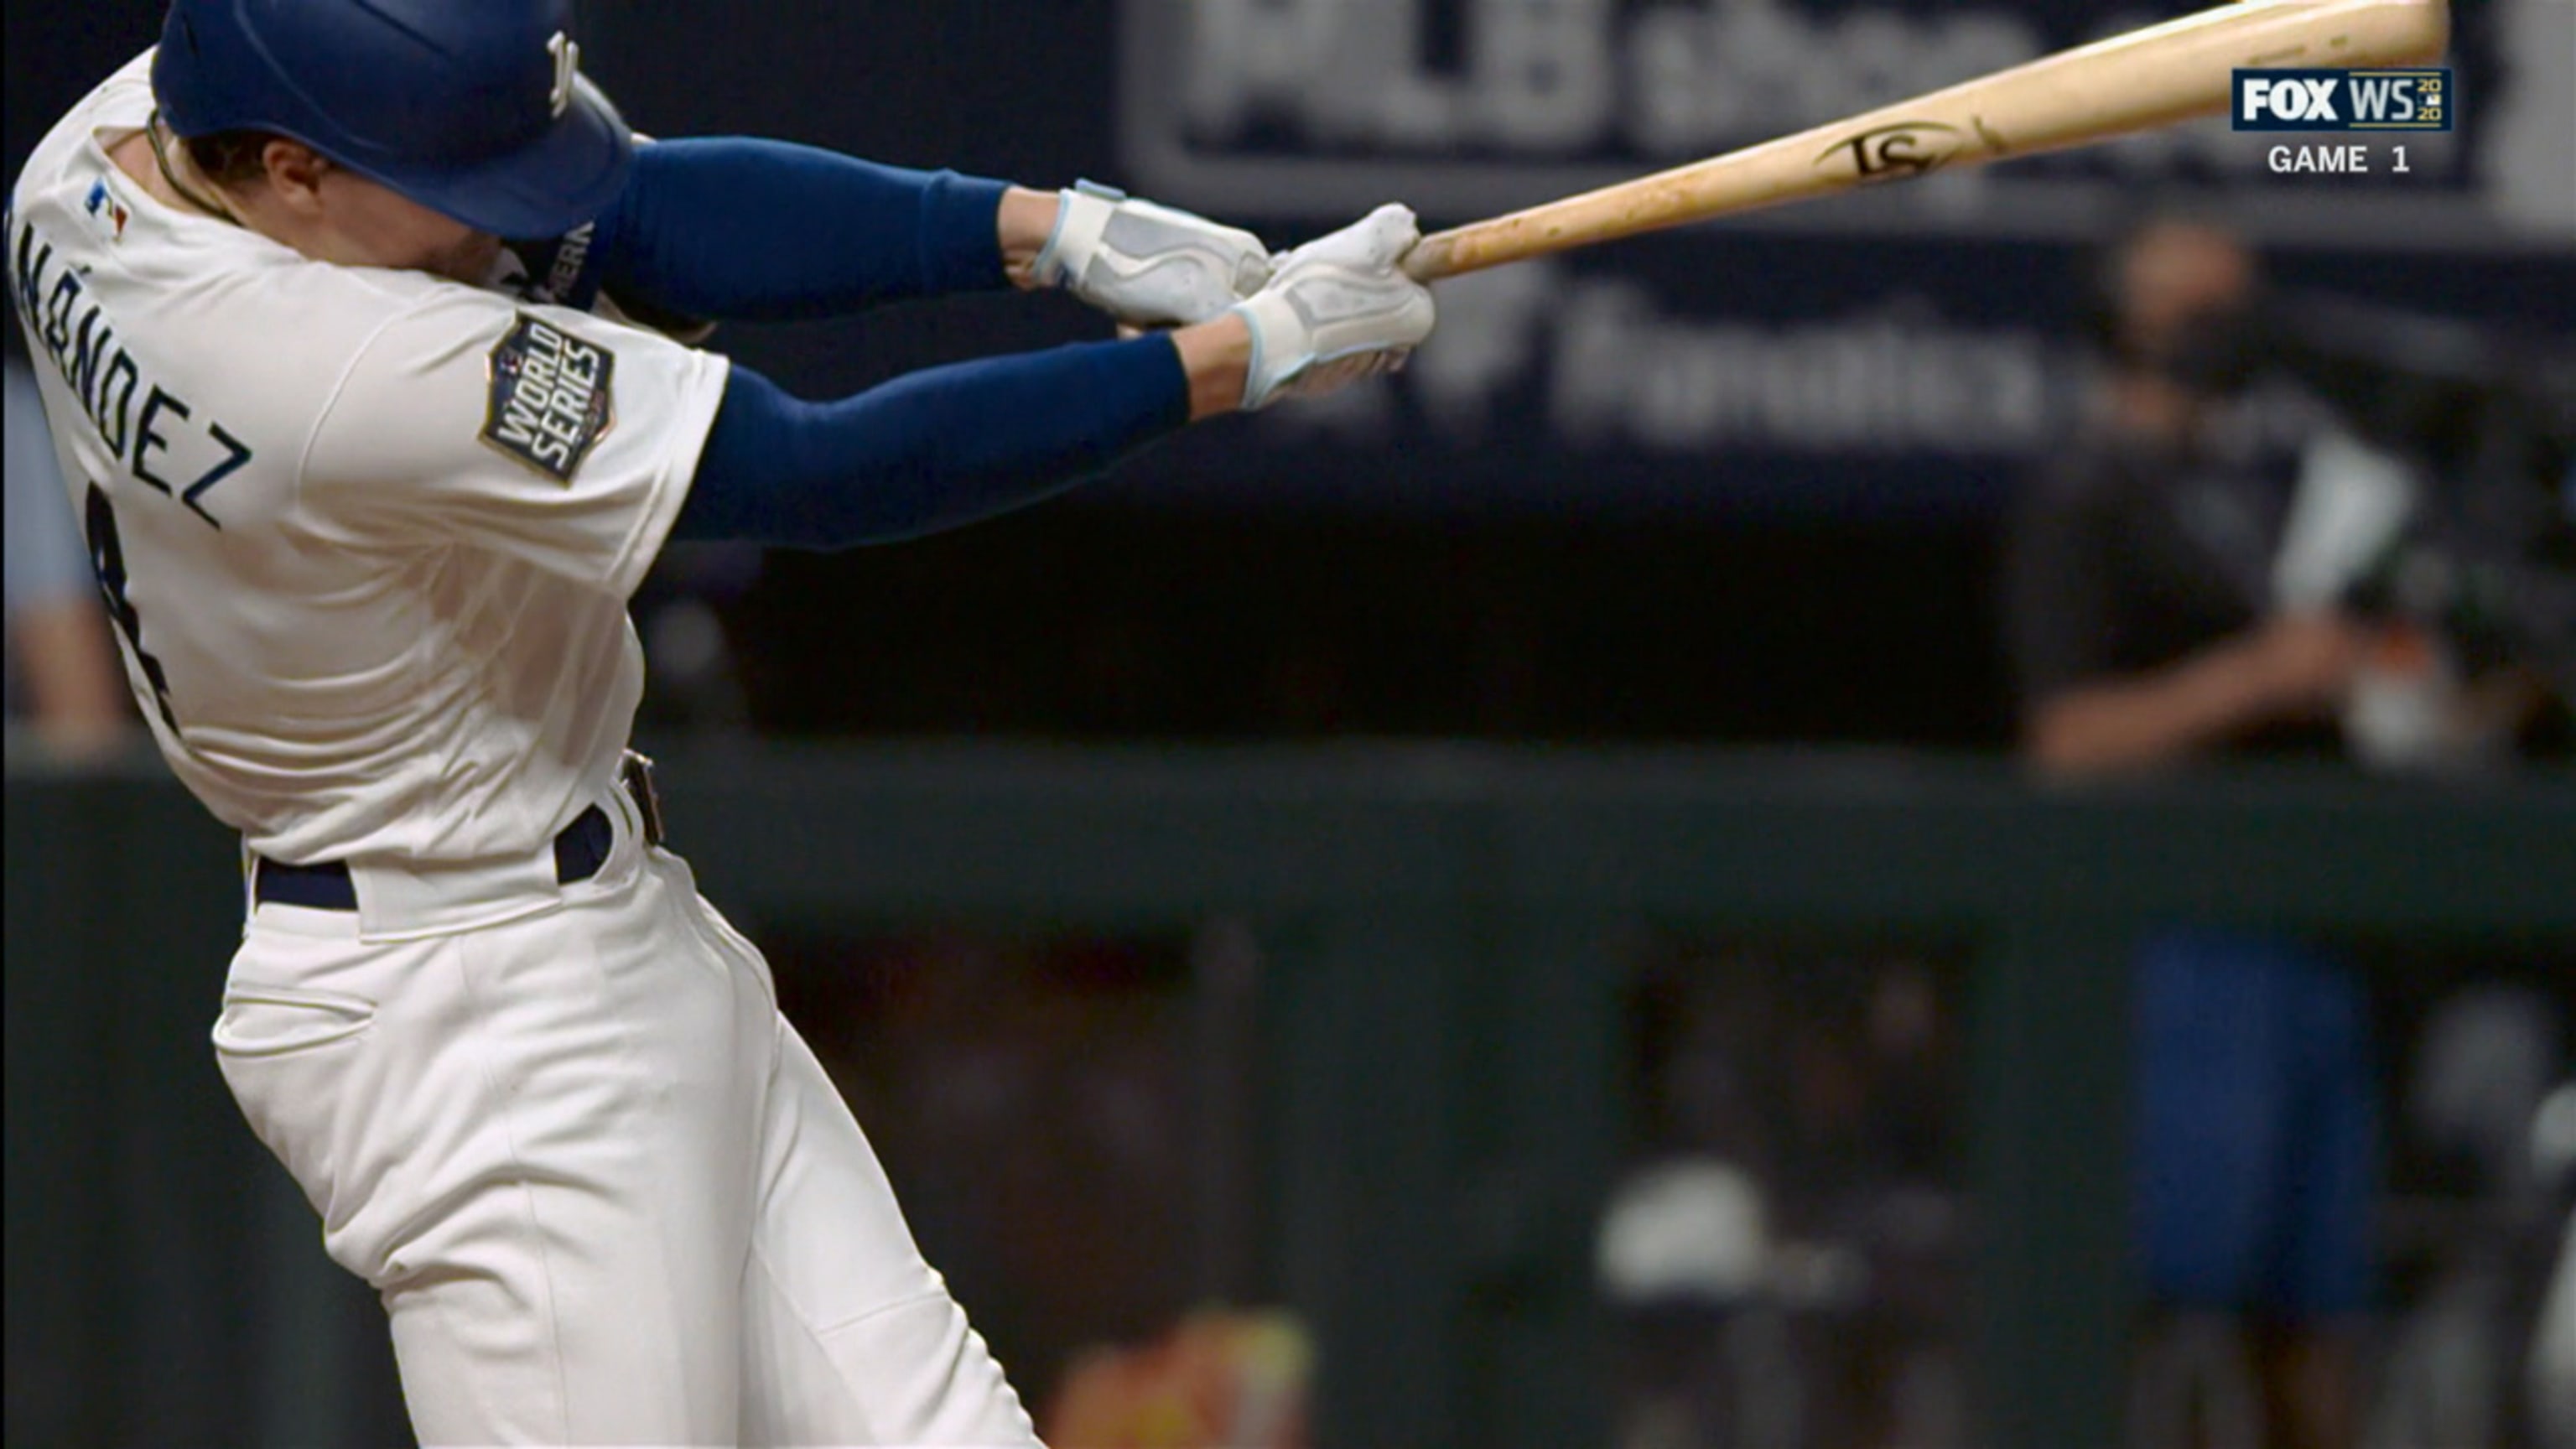 Red Sox trading Kiké Hernandez to Dodgers - CBS Boston